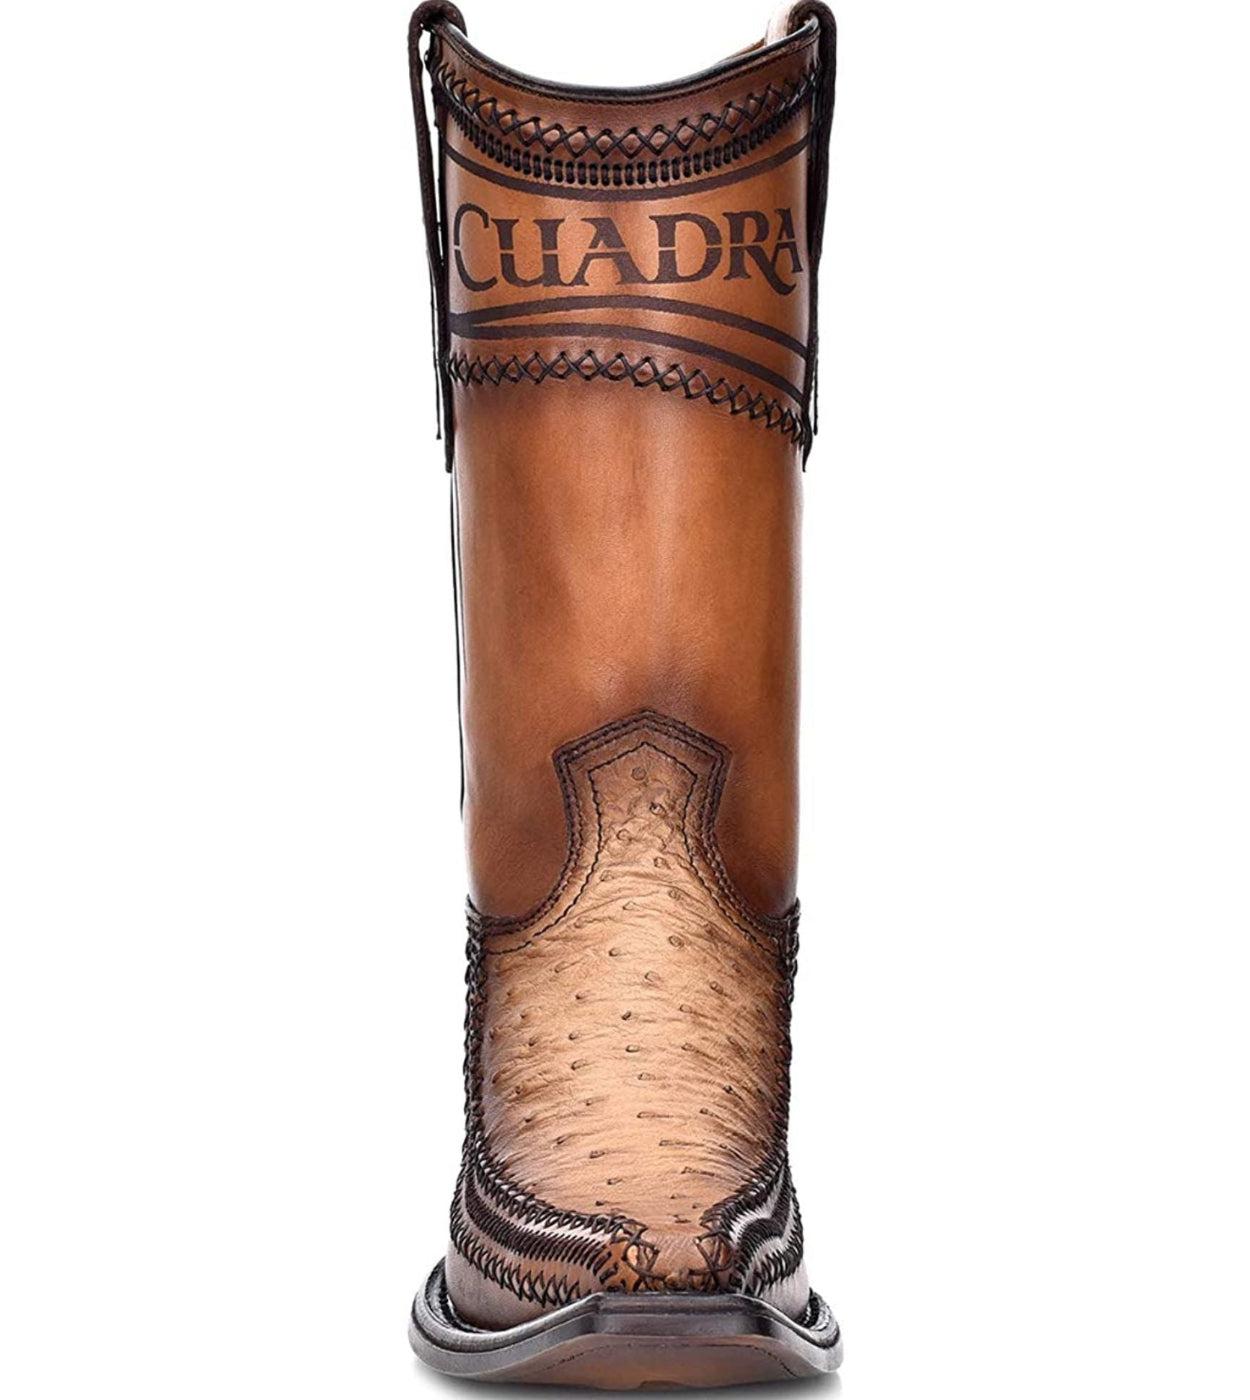 1B1AA1 - Cuadra orix casual fashion cowboy ostrich leather boots for men-CUADRA-Kuet-Cuadra-Boots